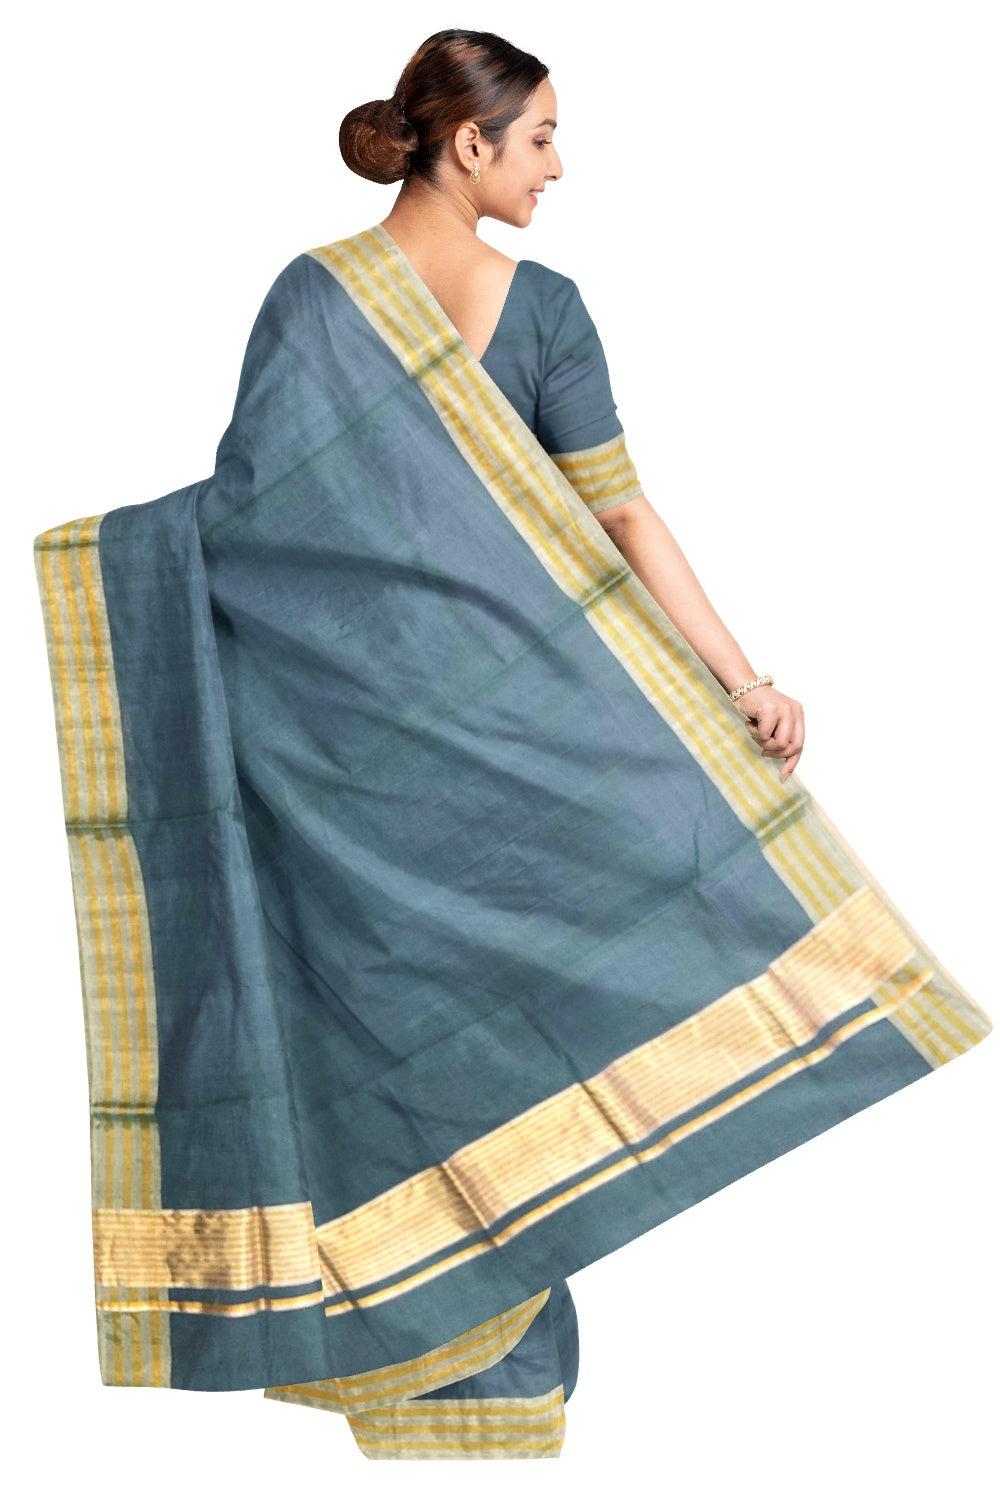 Southloom Balaramapuram Handloom Cotton Greyish Green Saree with Golden and Silver Border